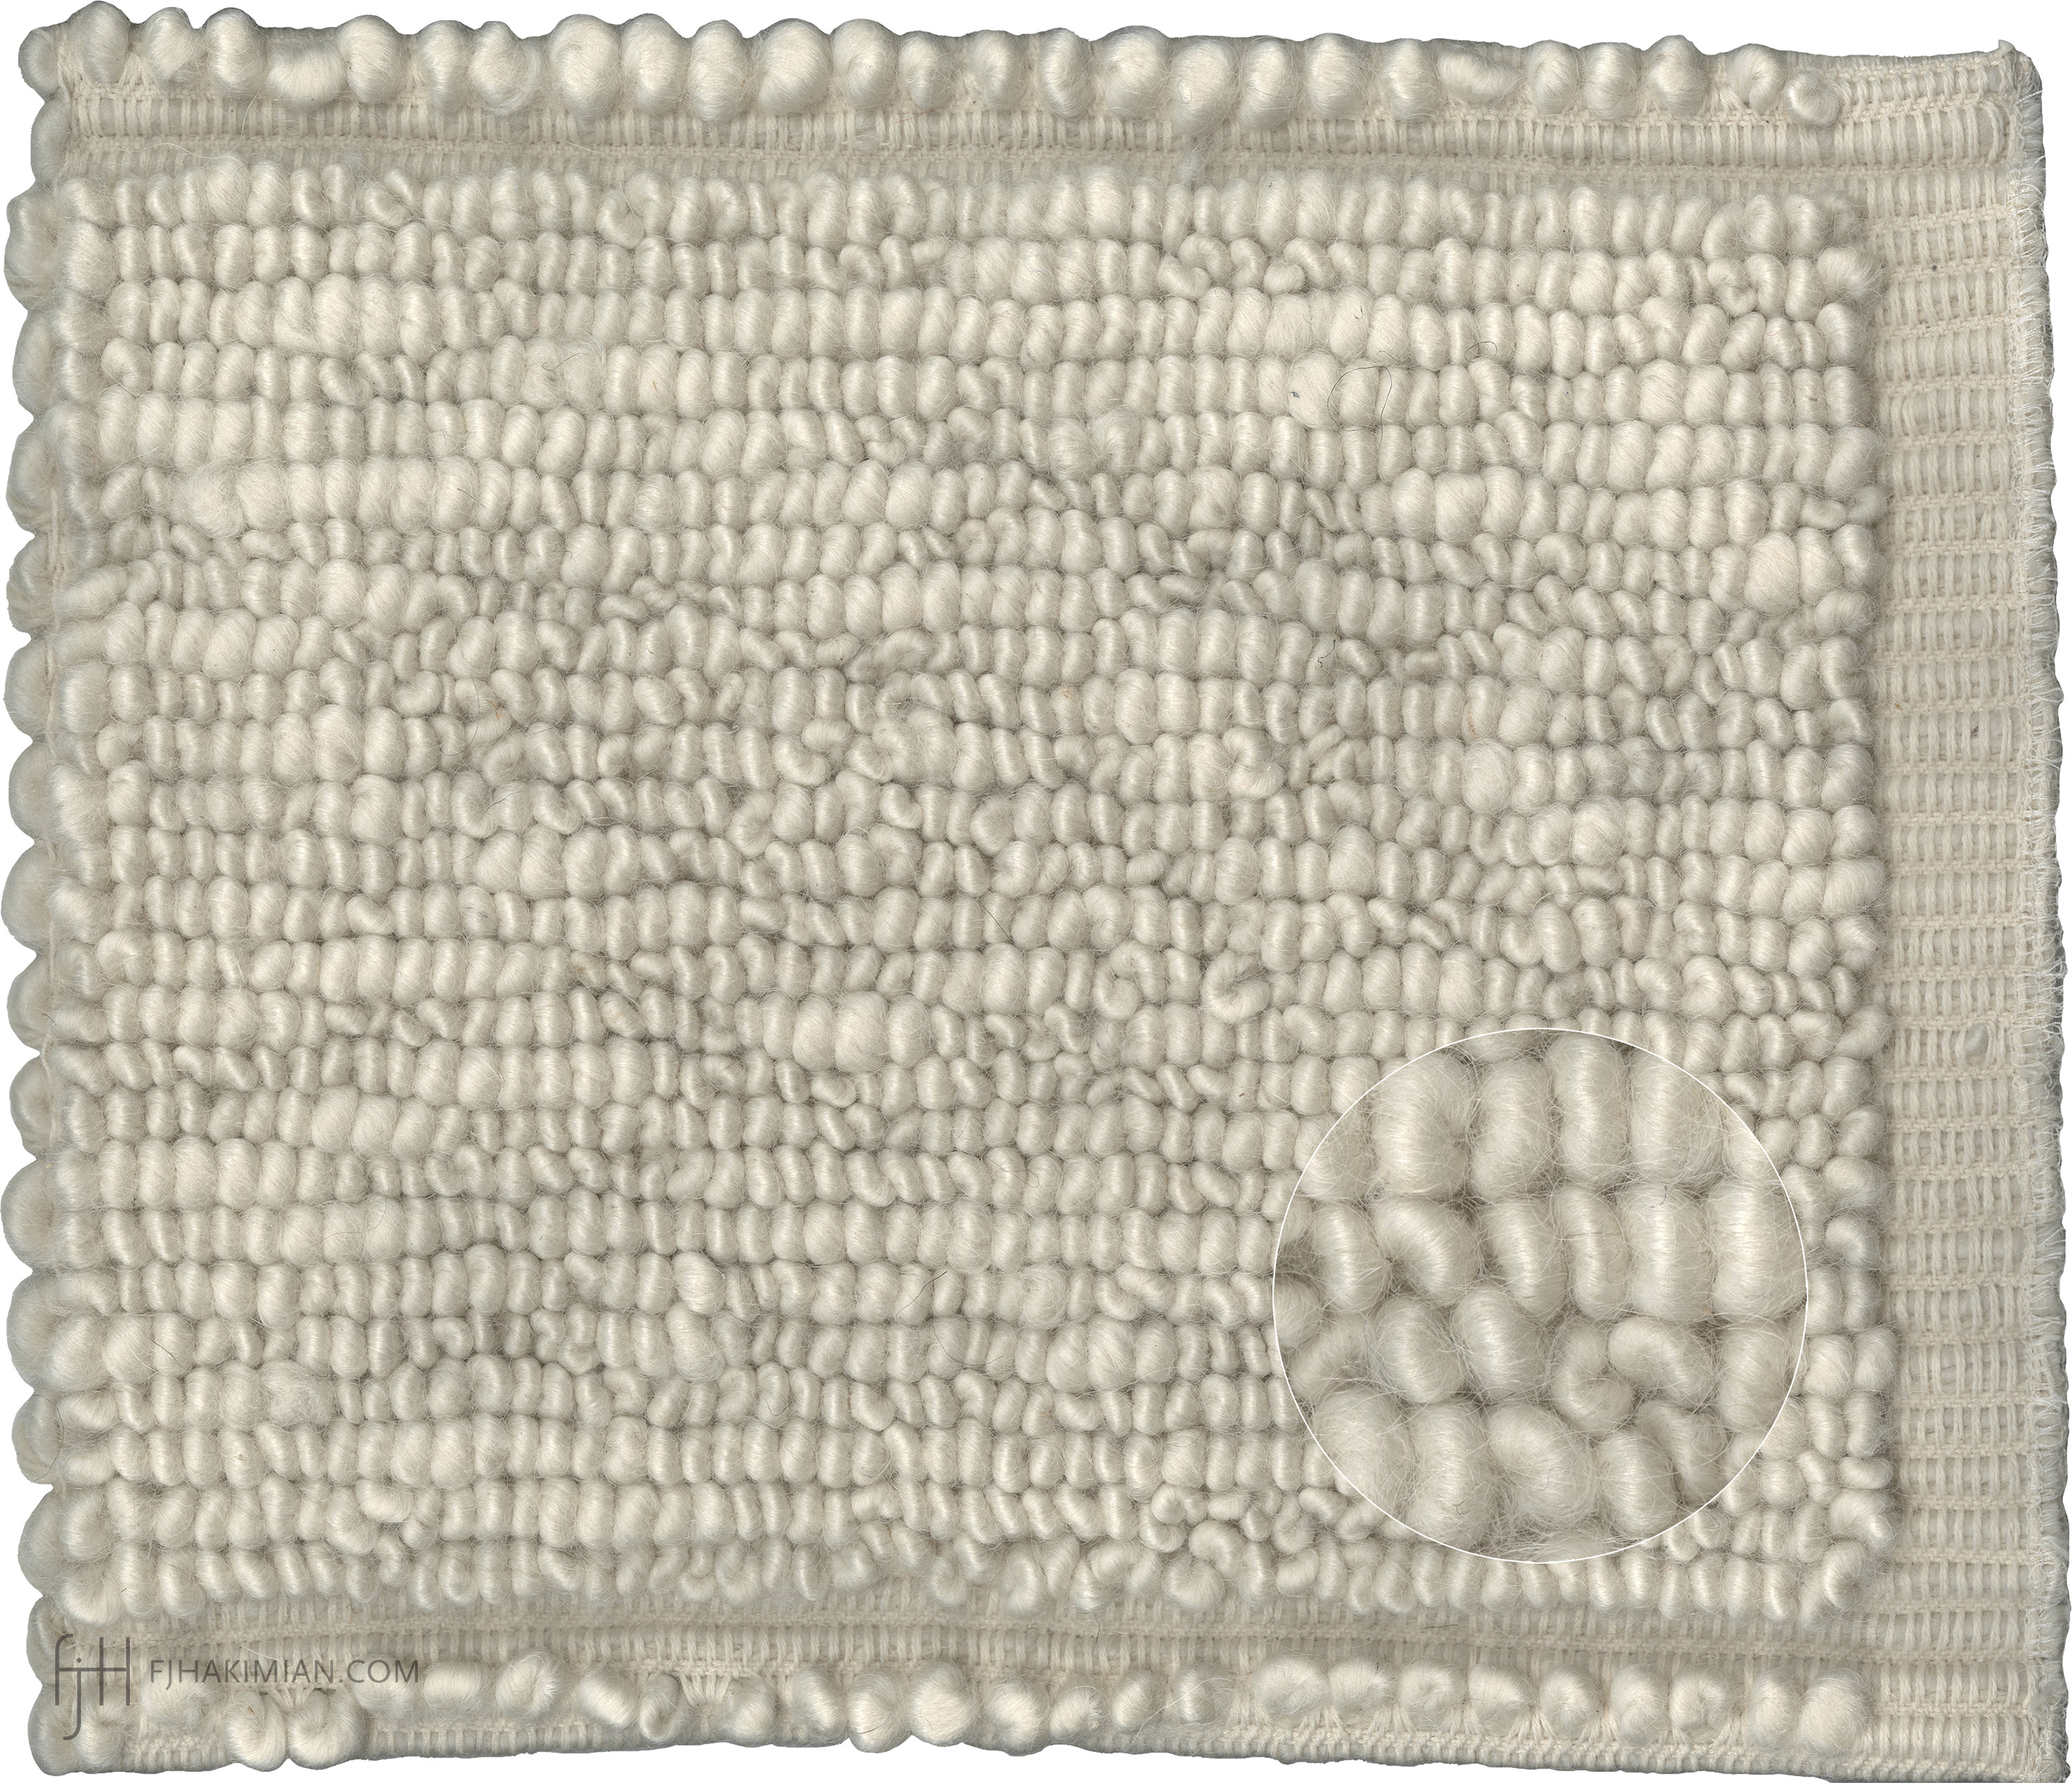 TC- White Mohair Sardinian Design | Custom Mohair Carpet | FJ Hakimian | Carpet Gallery in NYC